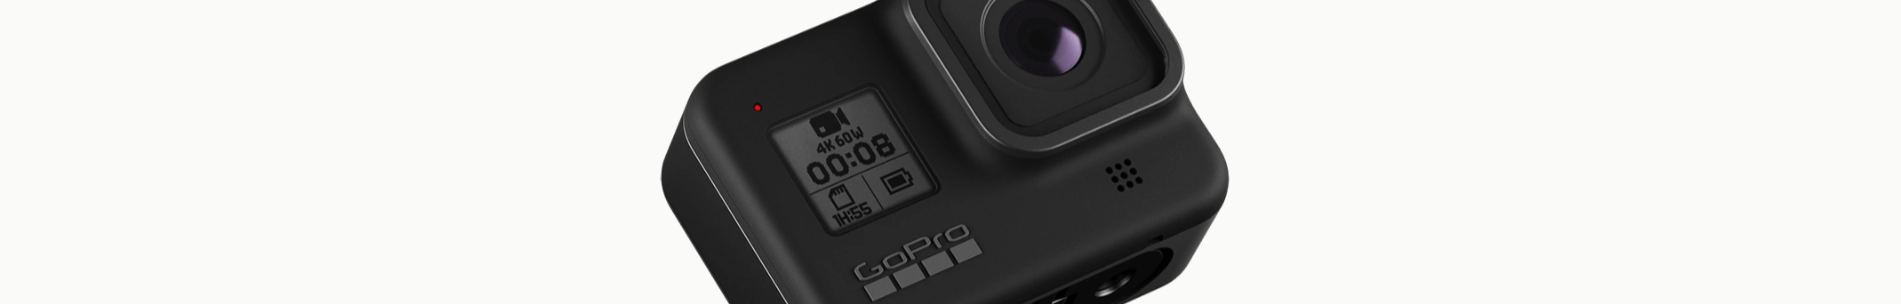 GoPro HERO8 black